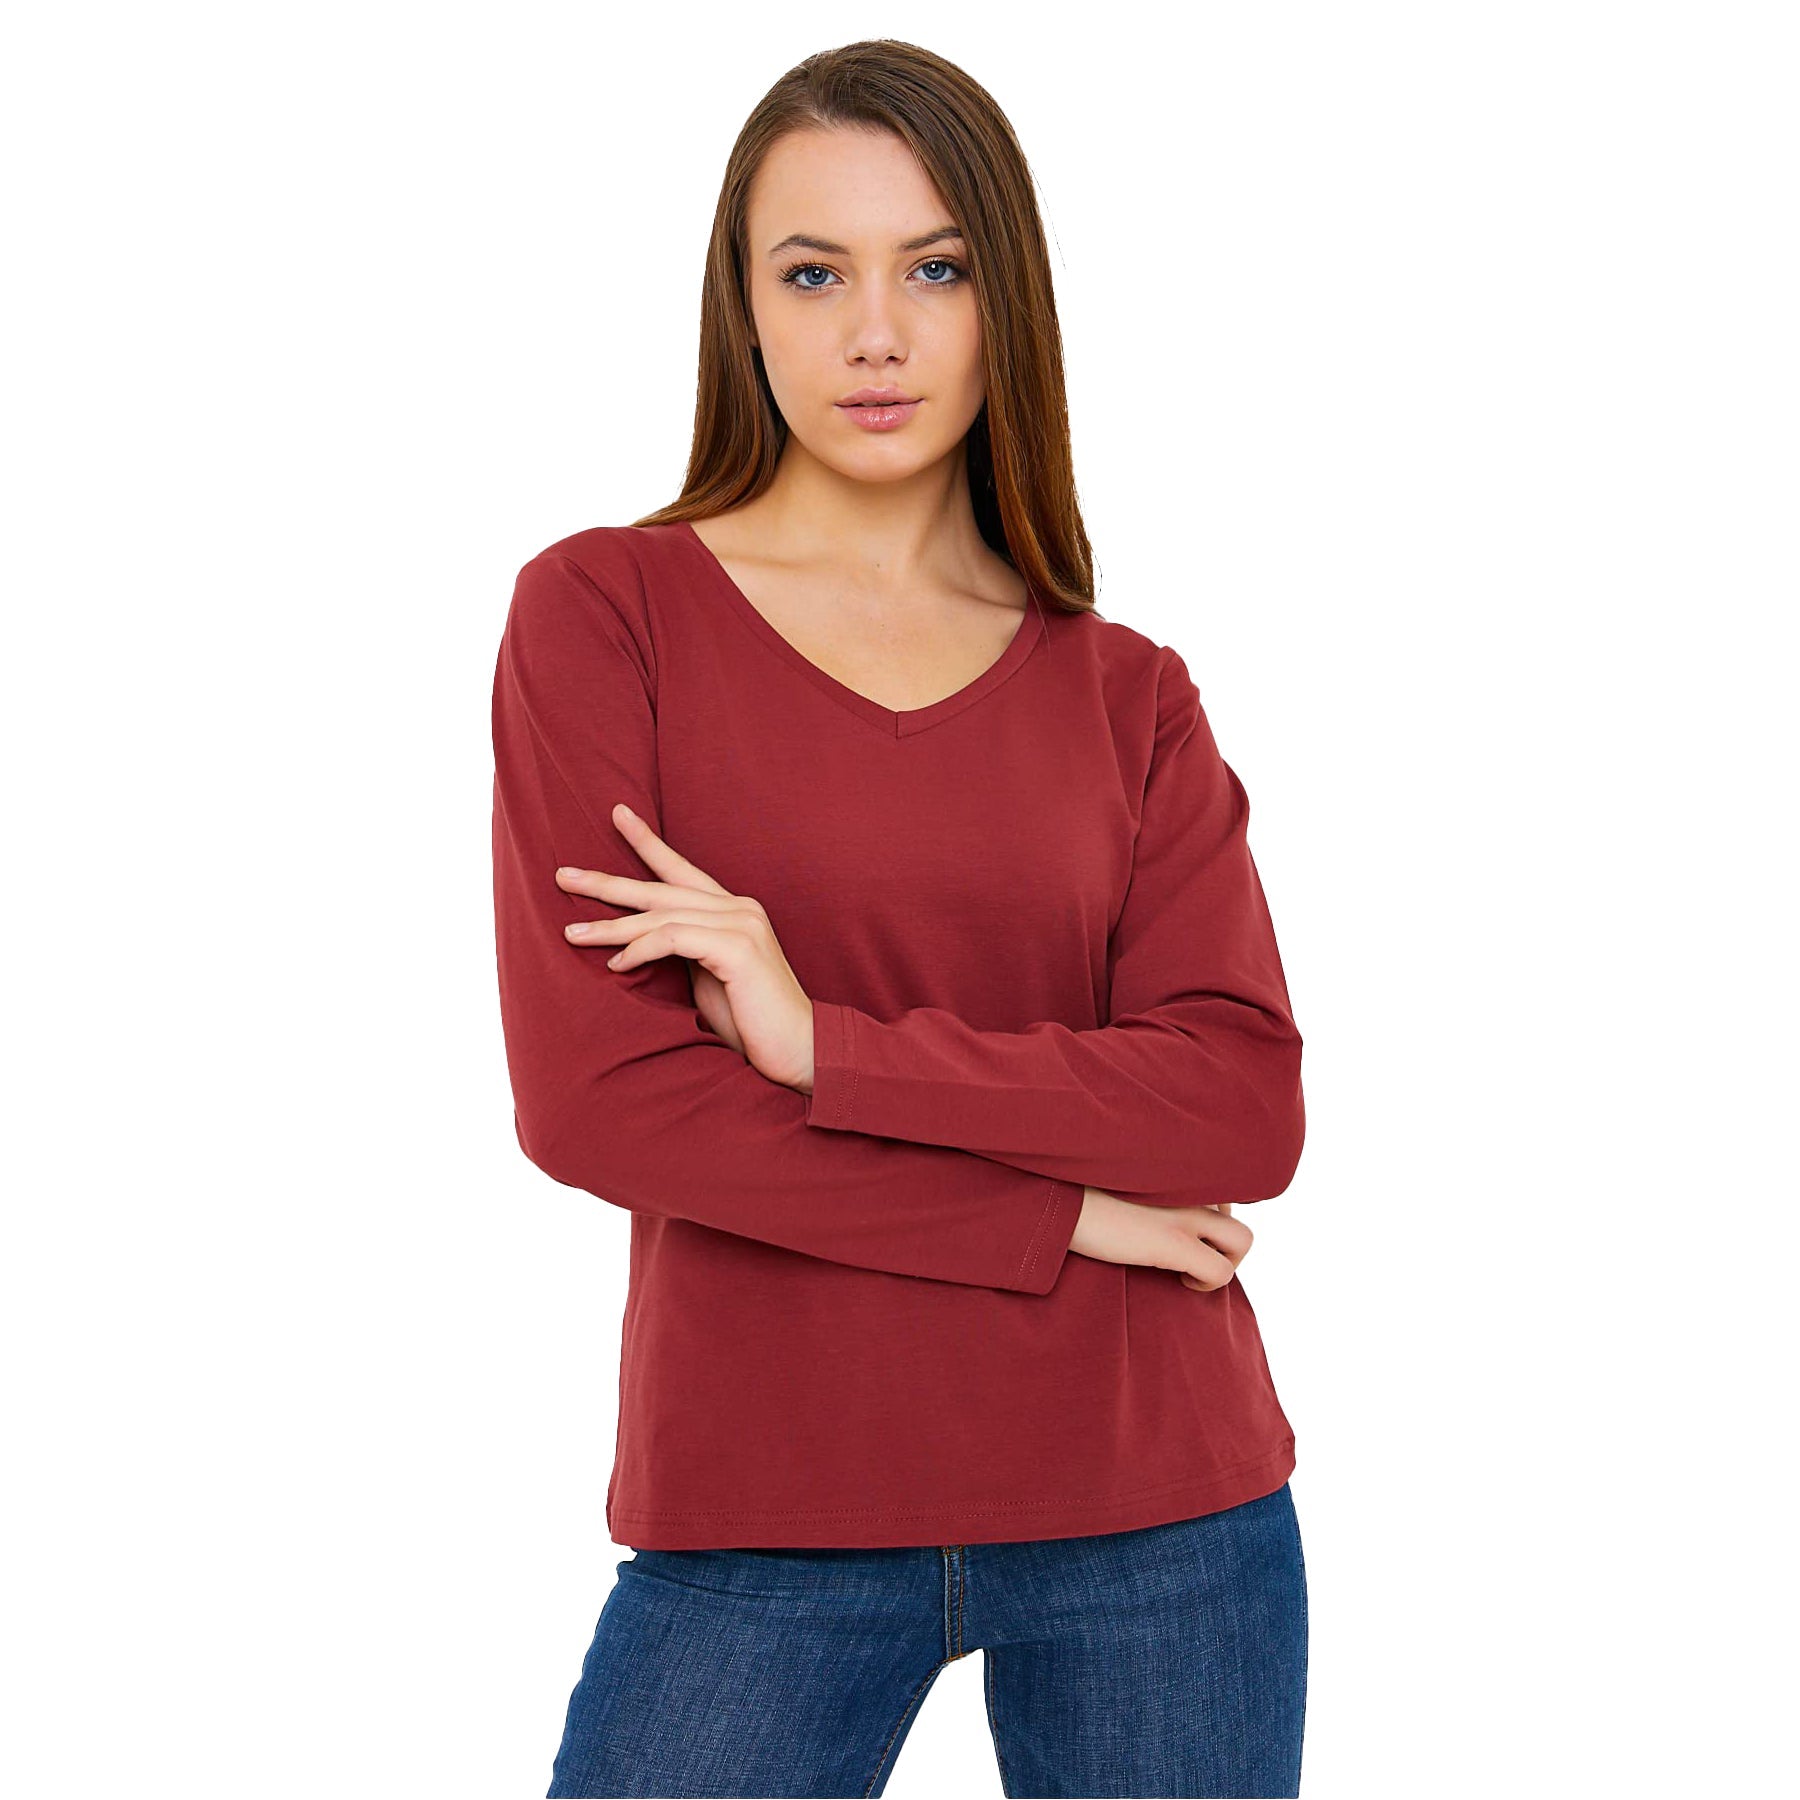 Long Sleeve V-Neck Shirts for Women & Girls - Colorful Pima Cotton-91